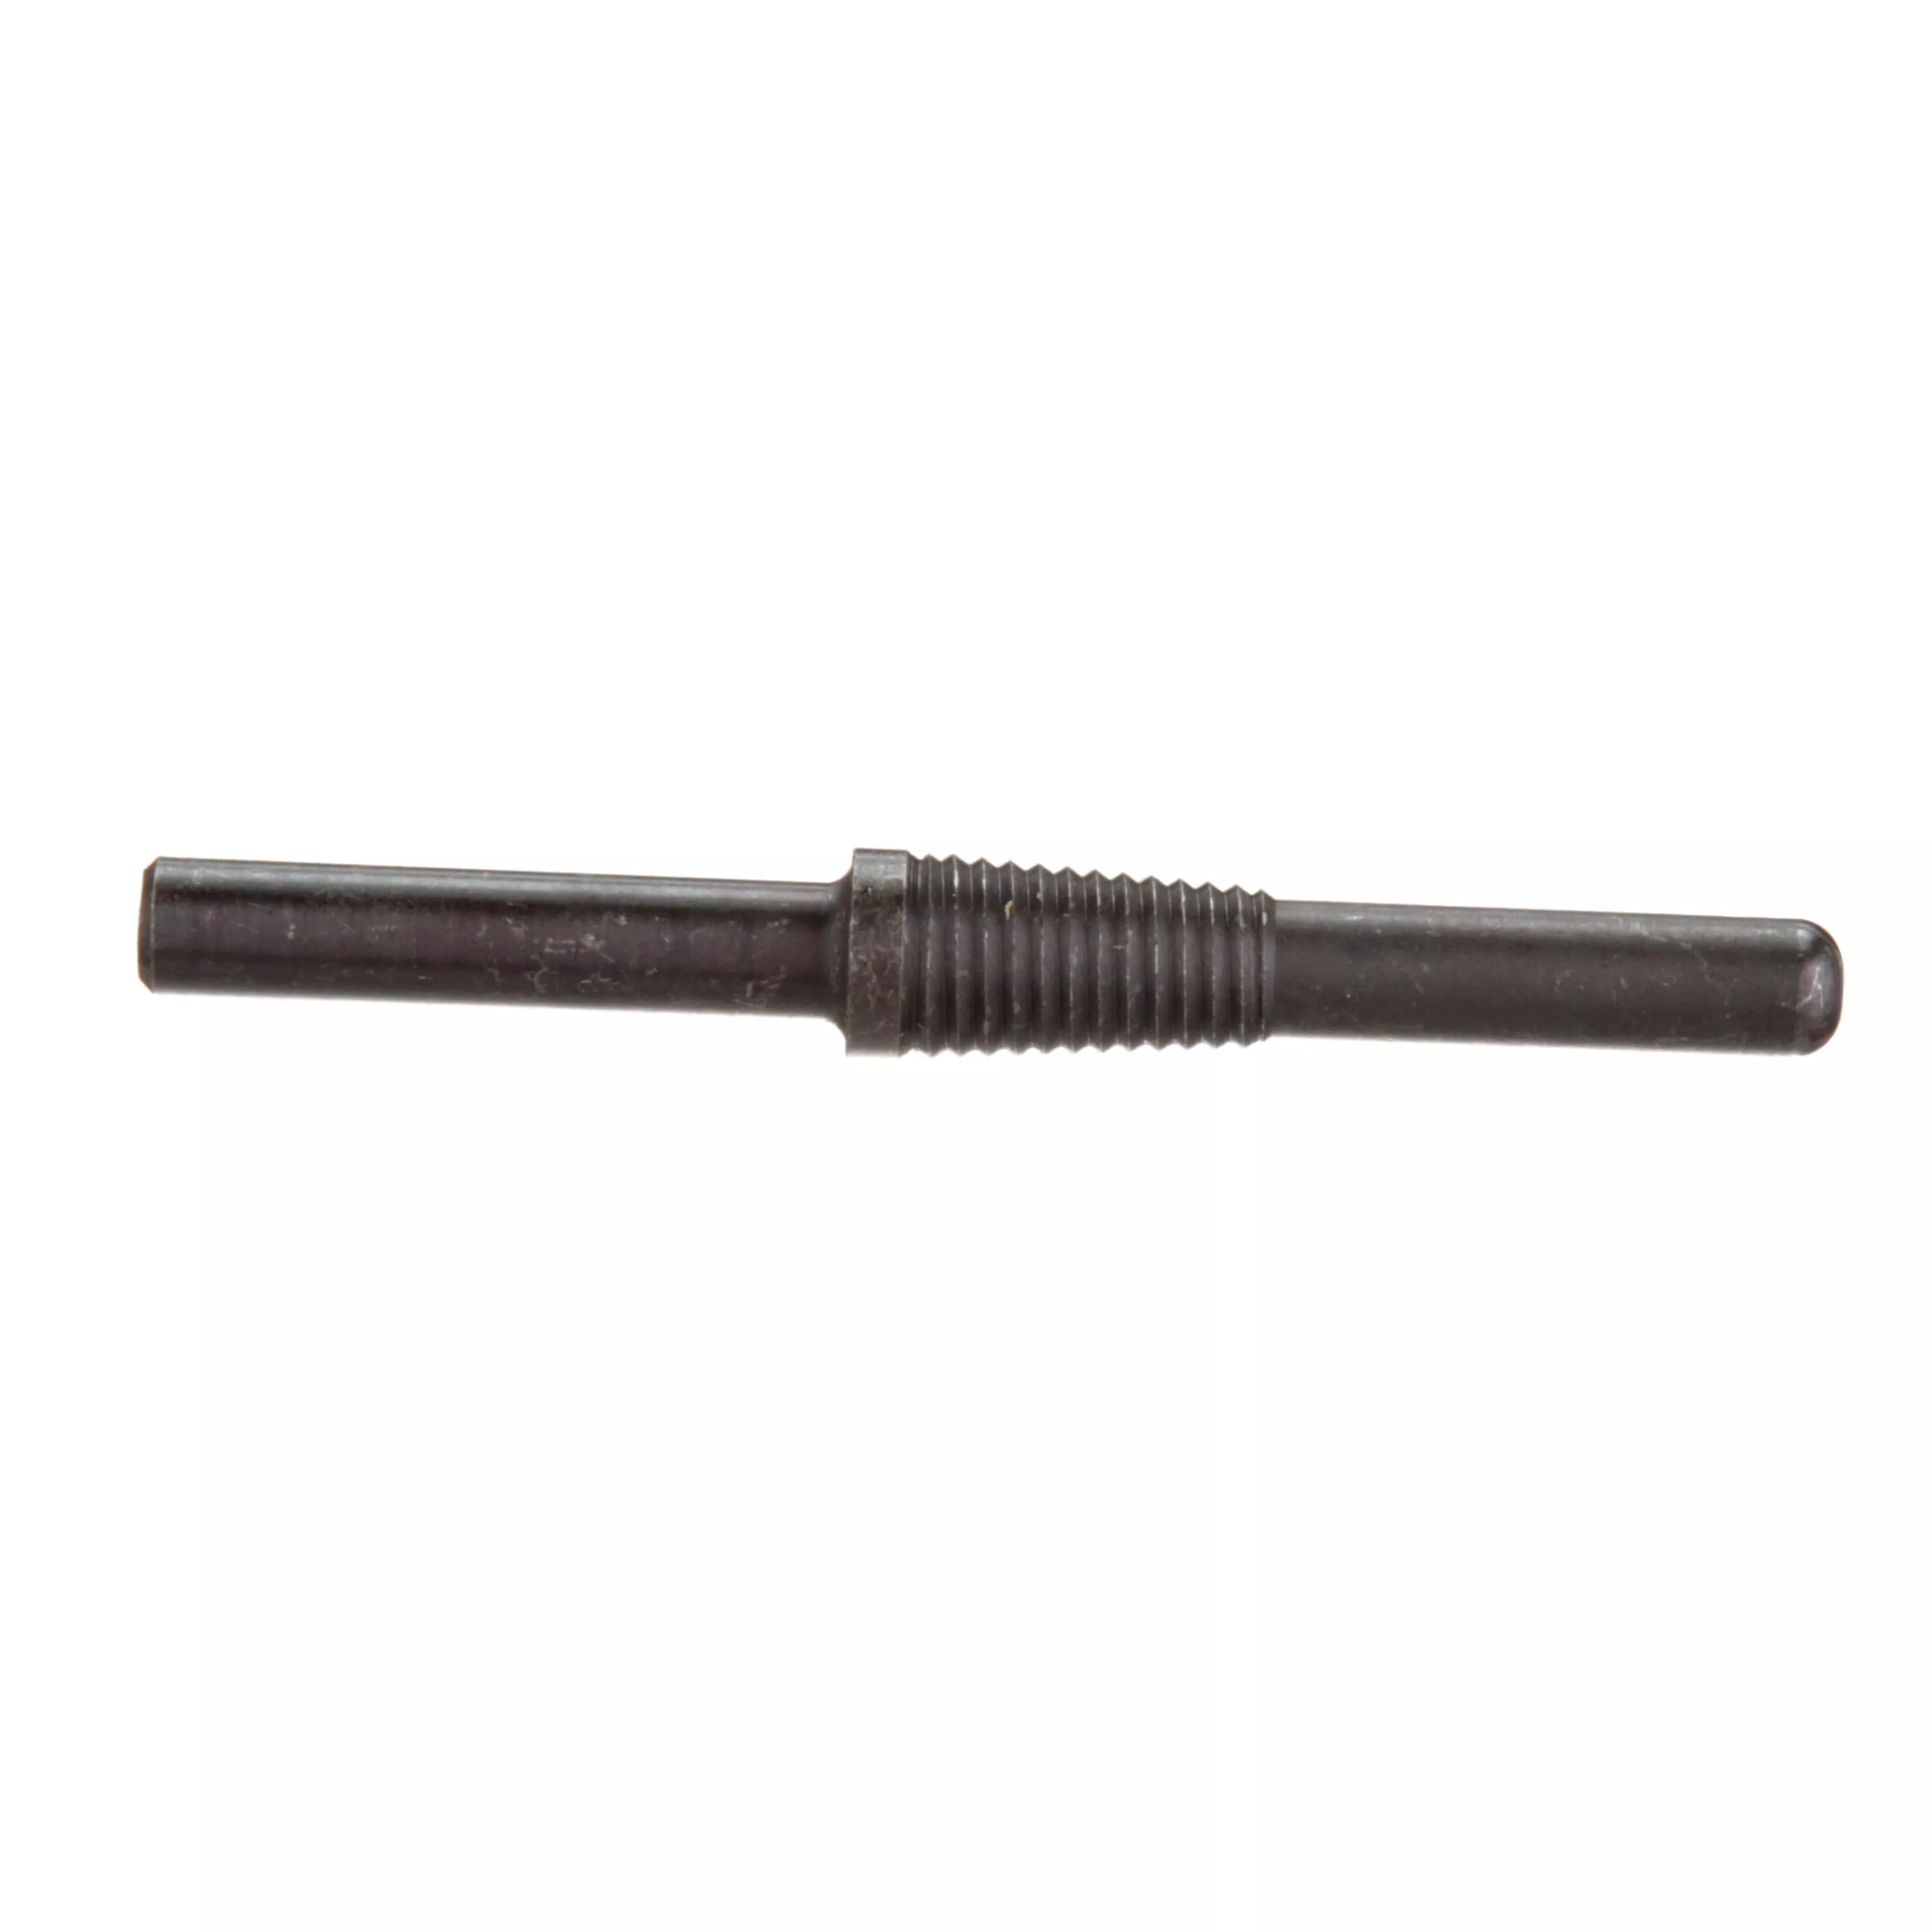 SKU 7000122119 | Standard Abrasives™ Cartridge Roll Mandrel 712584